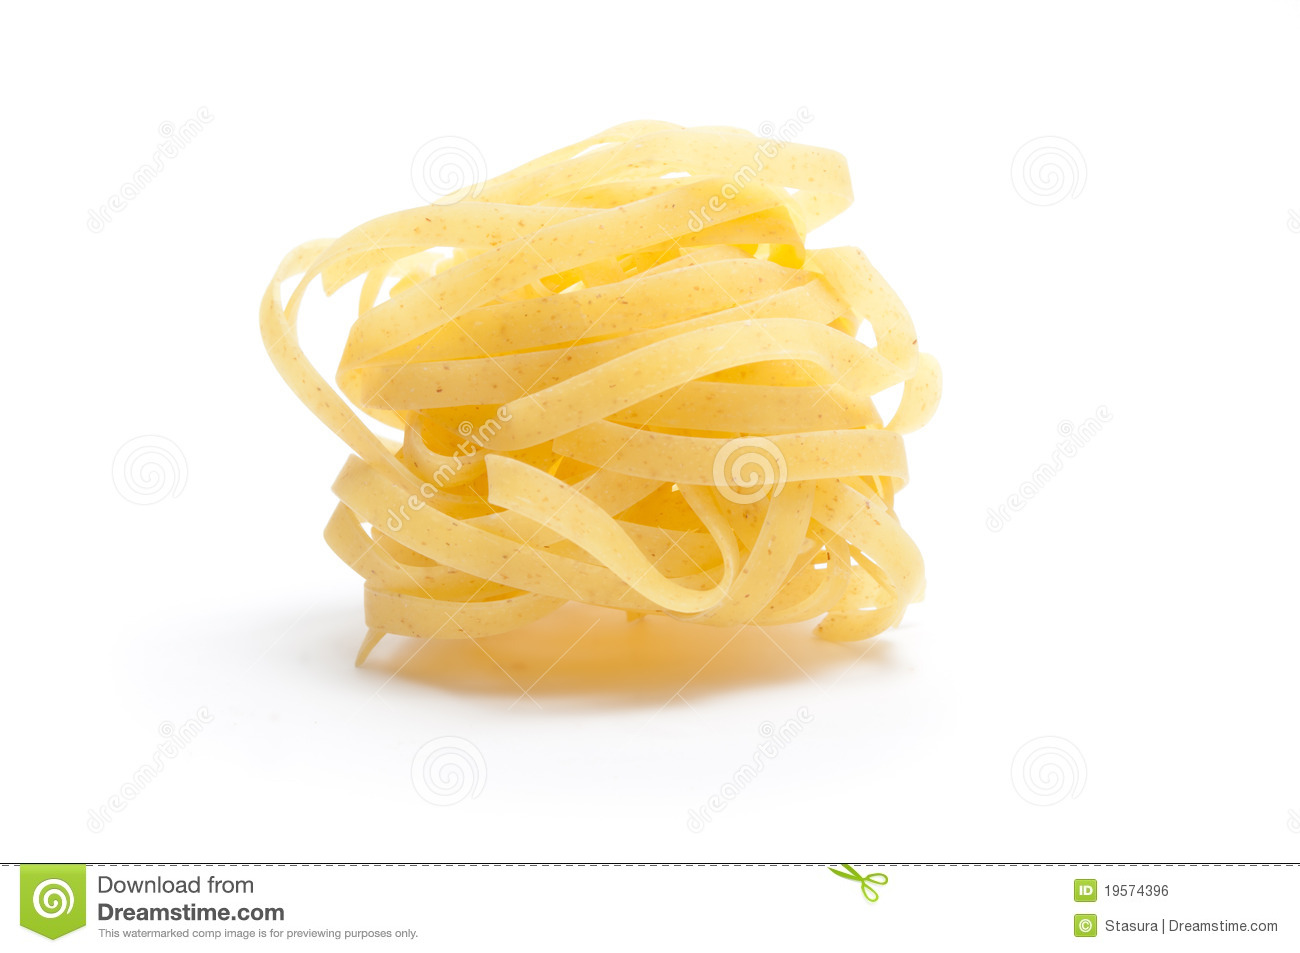 Uncooked Pasta Nest Royalty Free Stock Image   Image  19574396